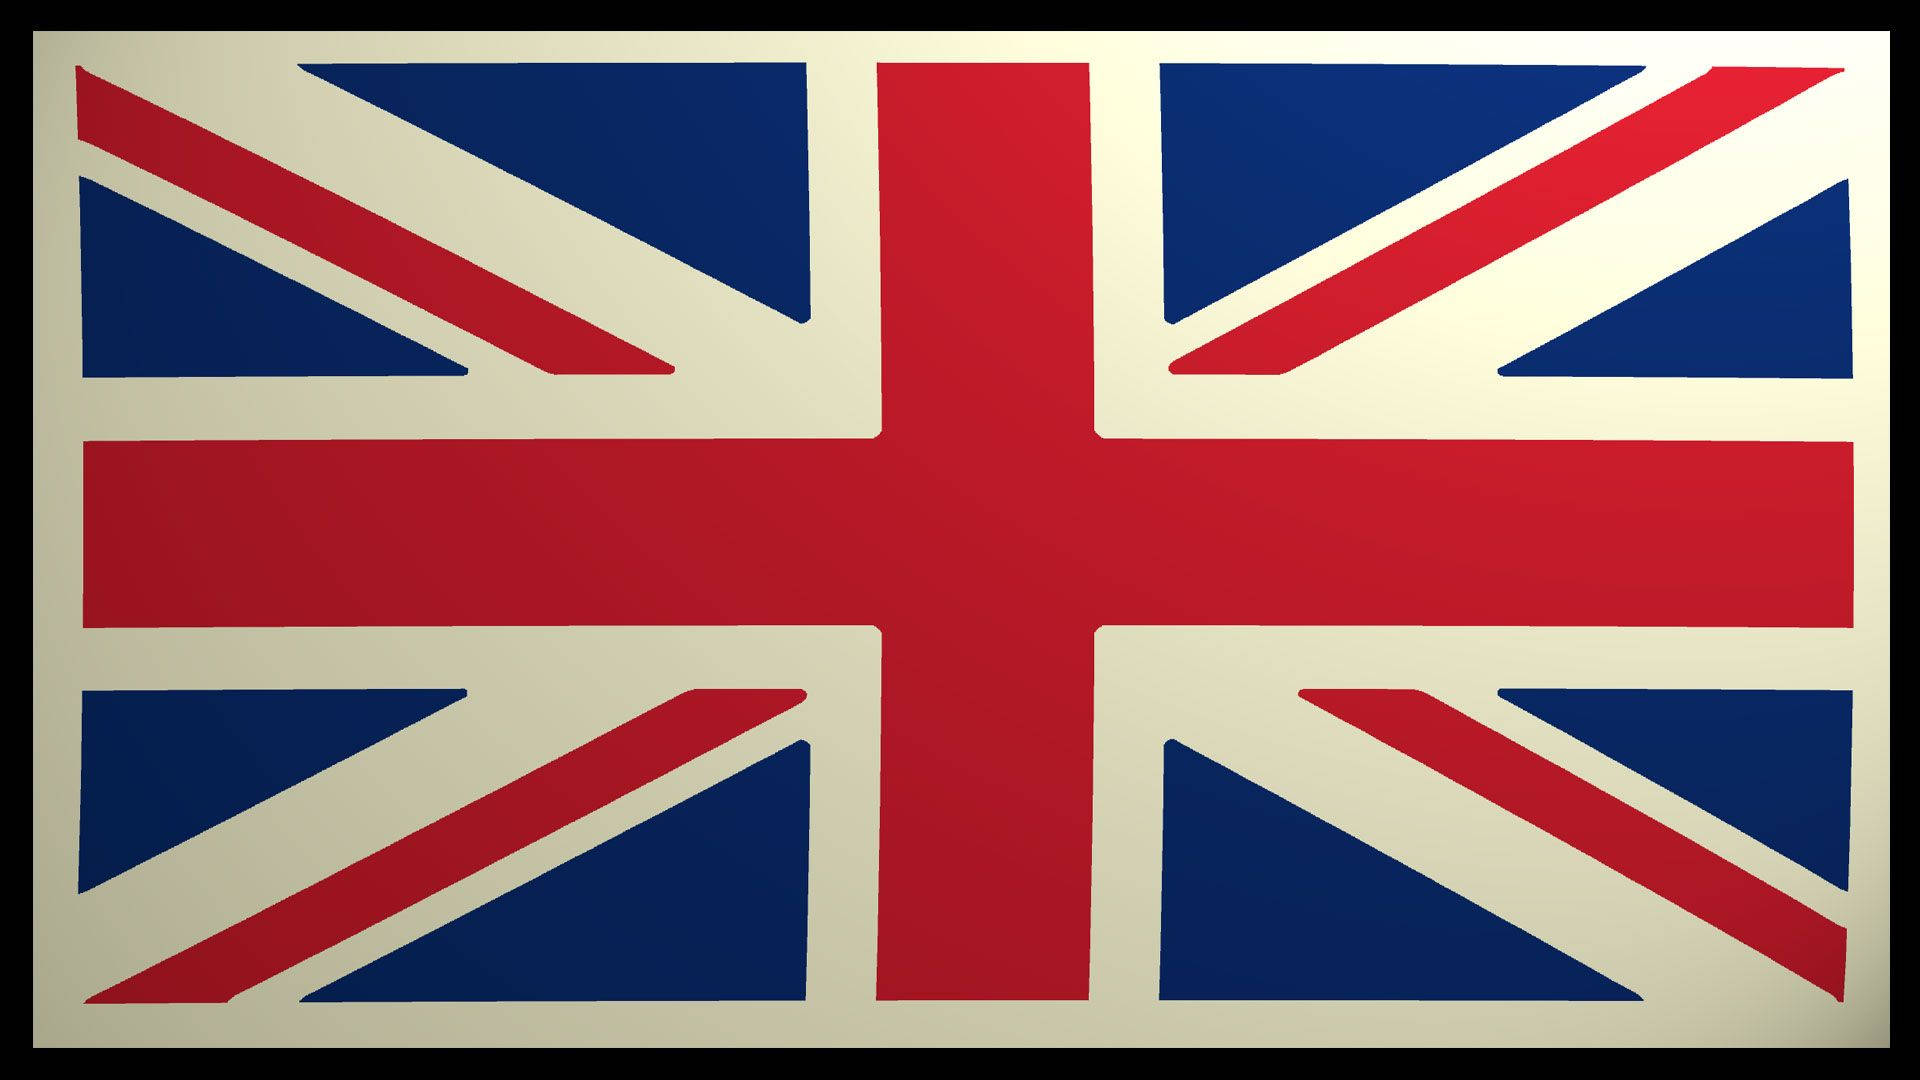 HD wallpaper: flag, Union Jack, UK